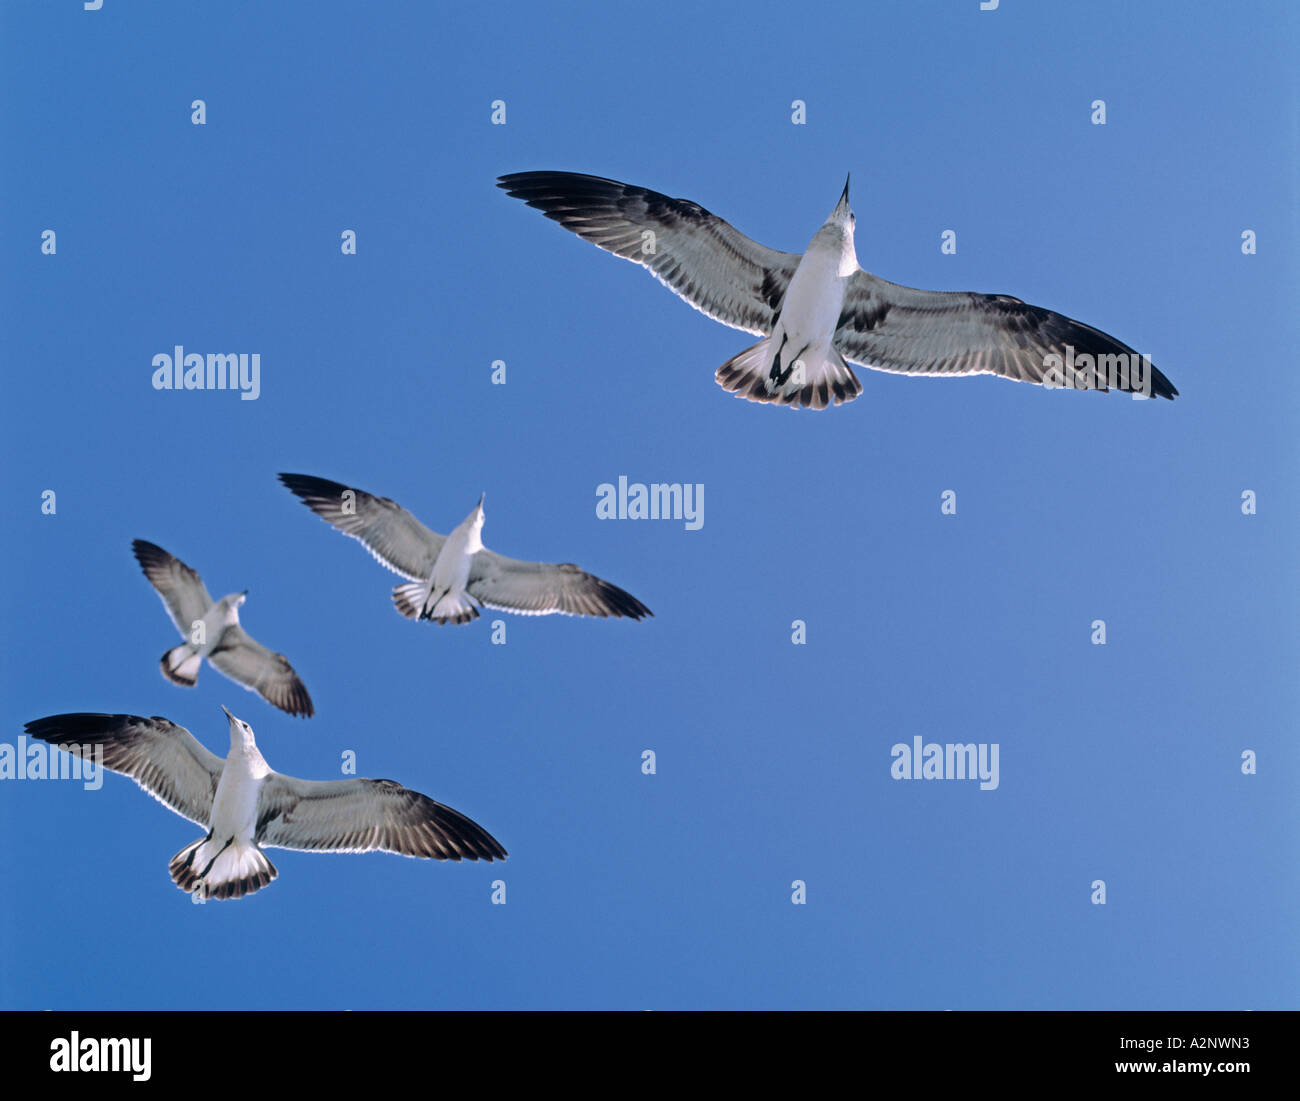 Flight of seagulls in blue sky Stock Photo